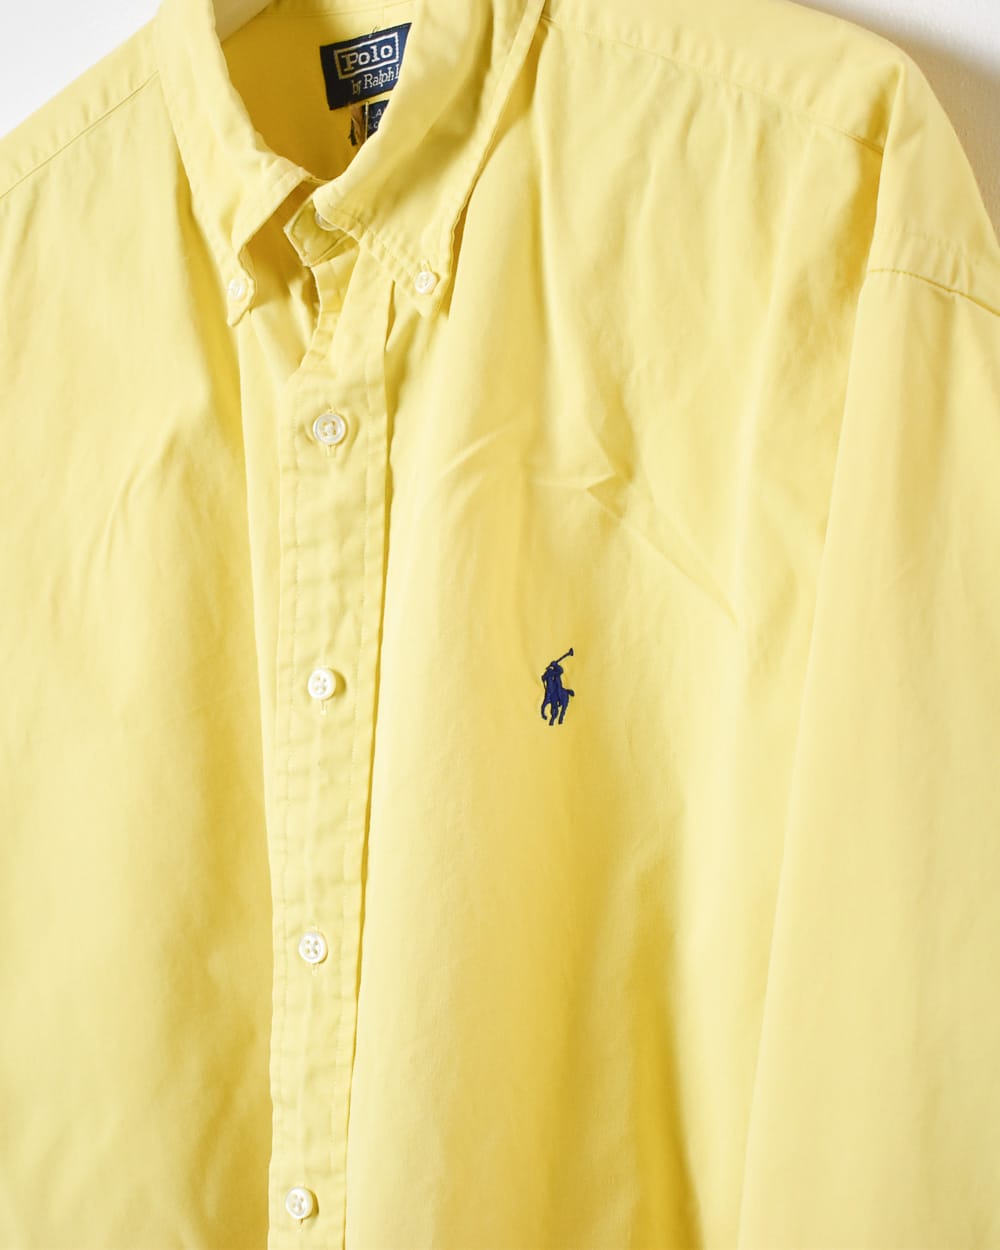 Yellow Polo Ralph Lauren Shirt - X-Large